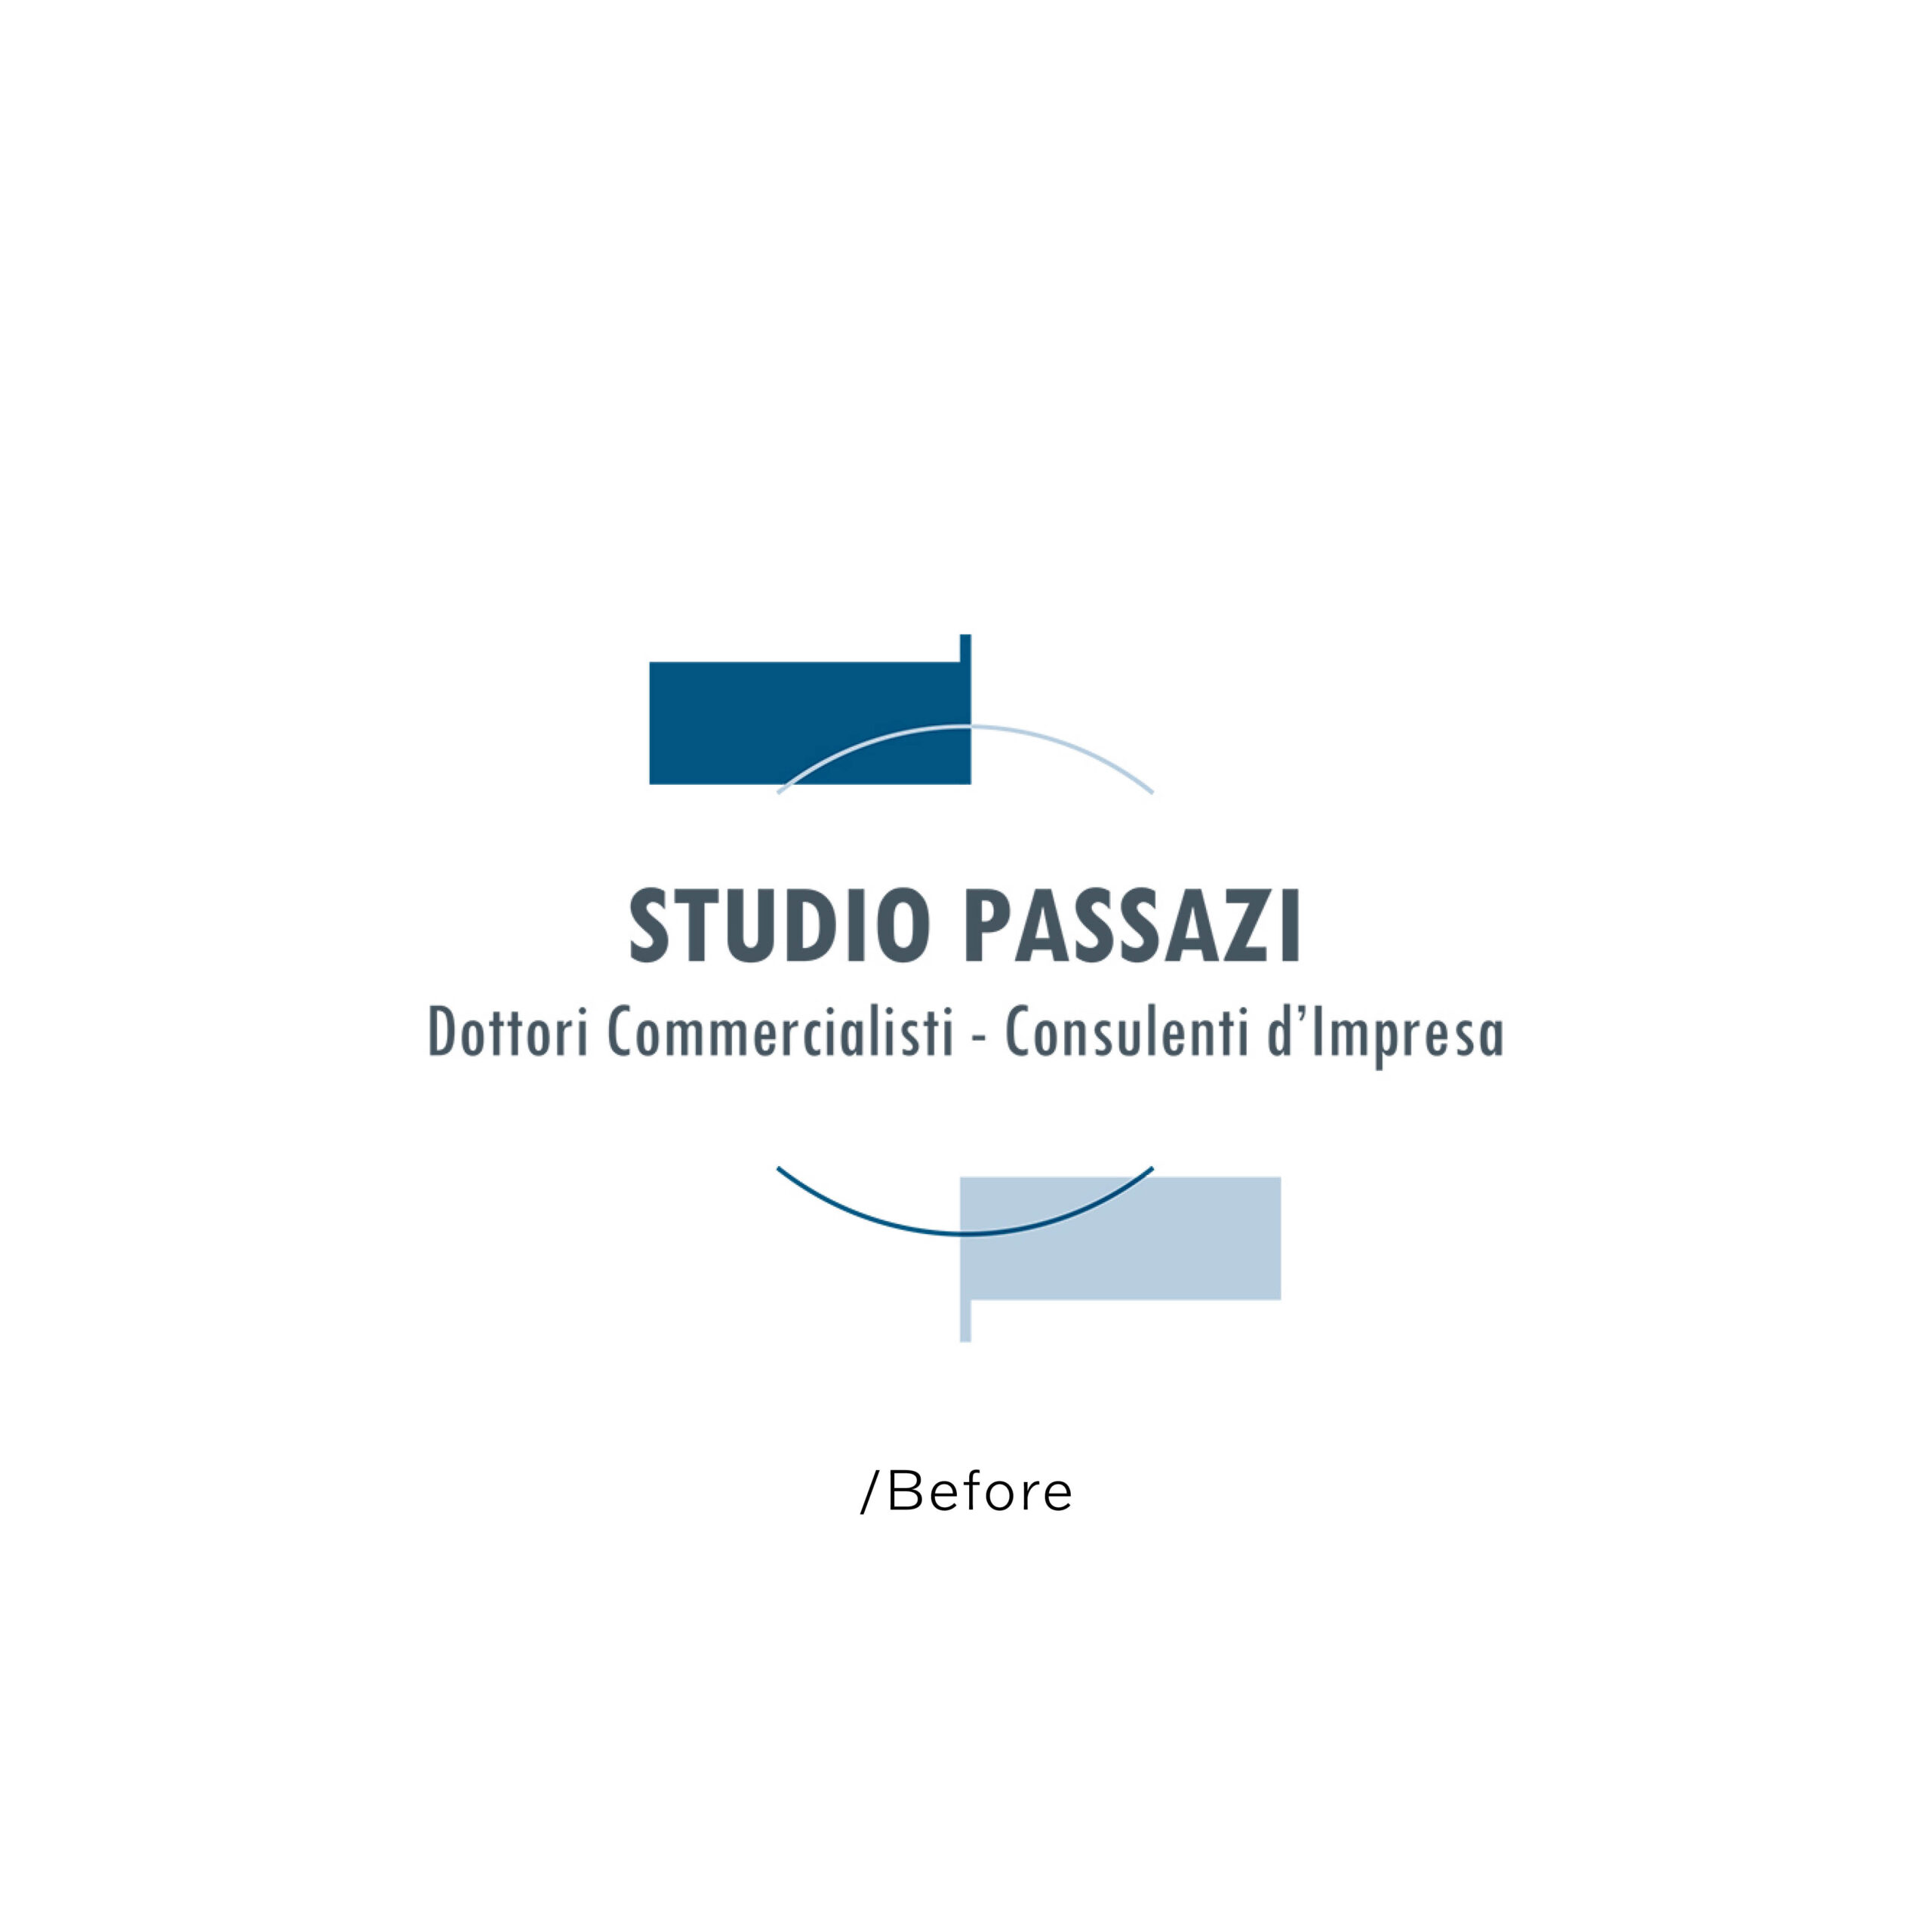 StudioPasazzi-1b-mobile